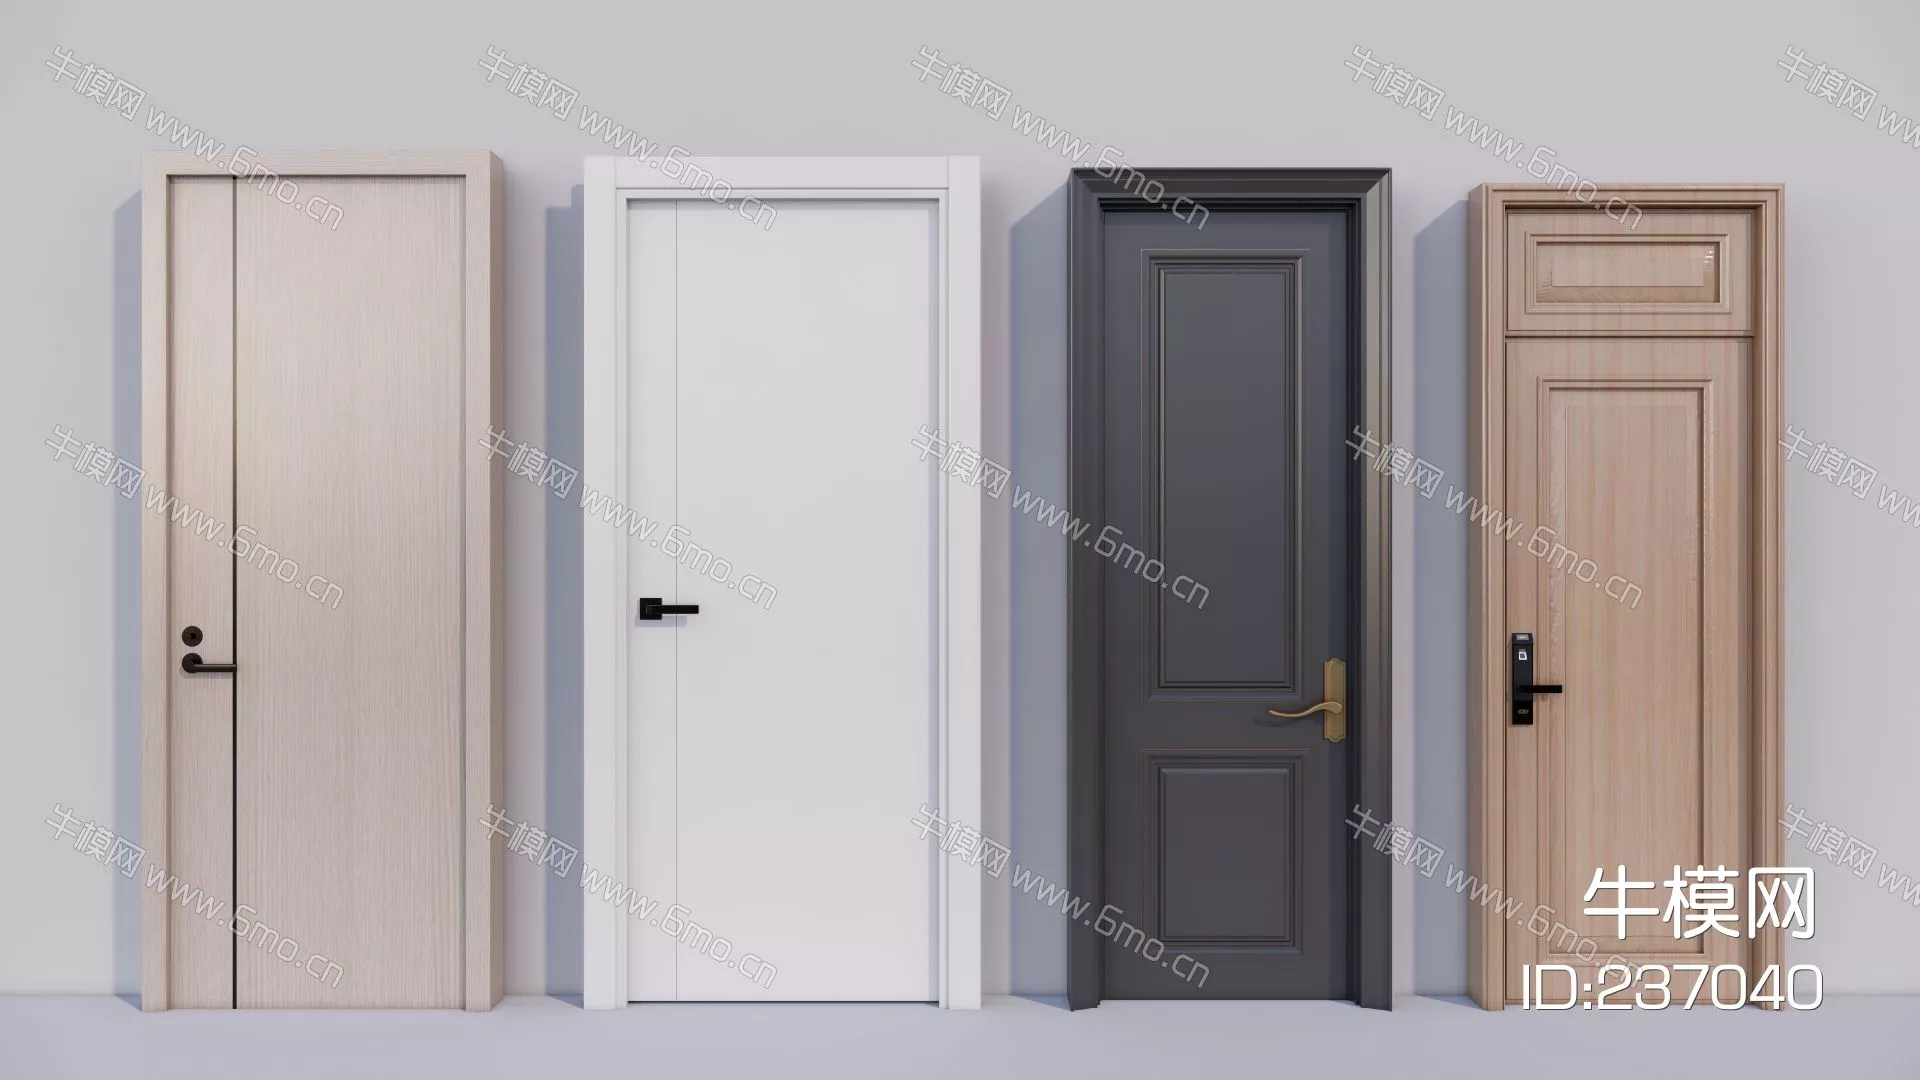 MODERN DOOR AND WINDOWS - SKETCHUP 3D MODEL - ENSCAPE - 237040